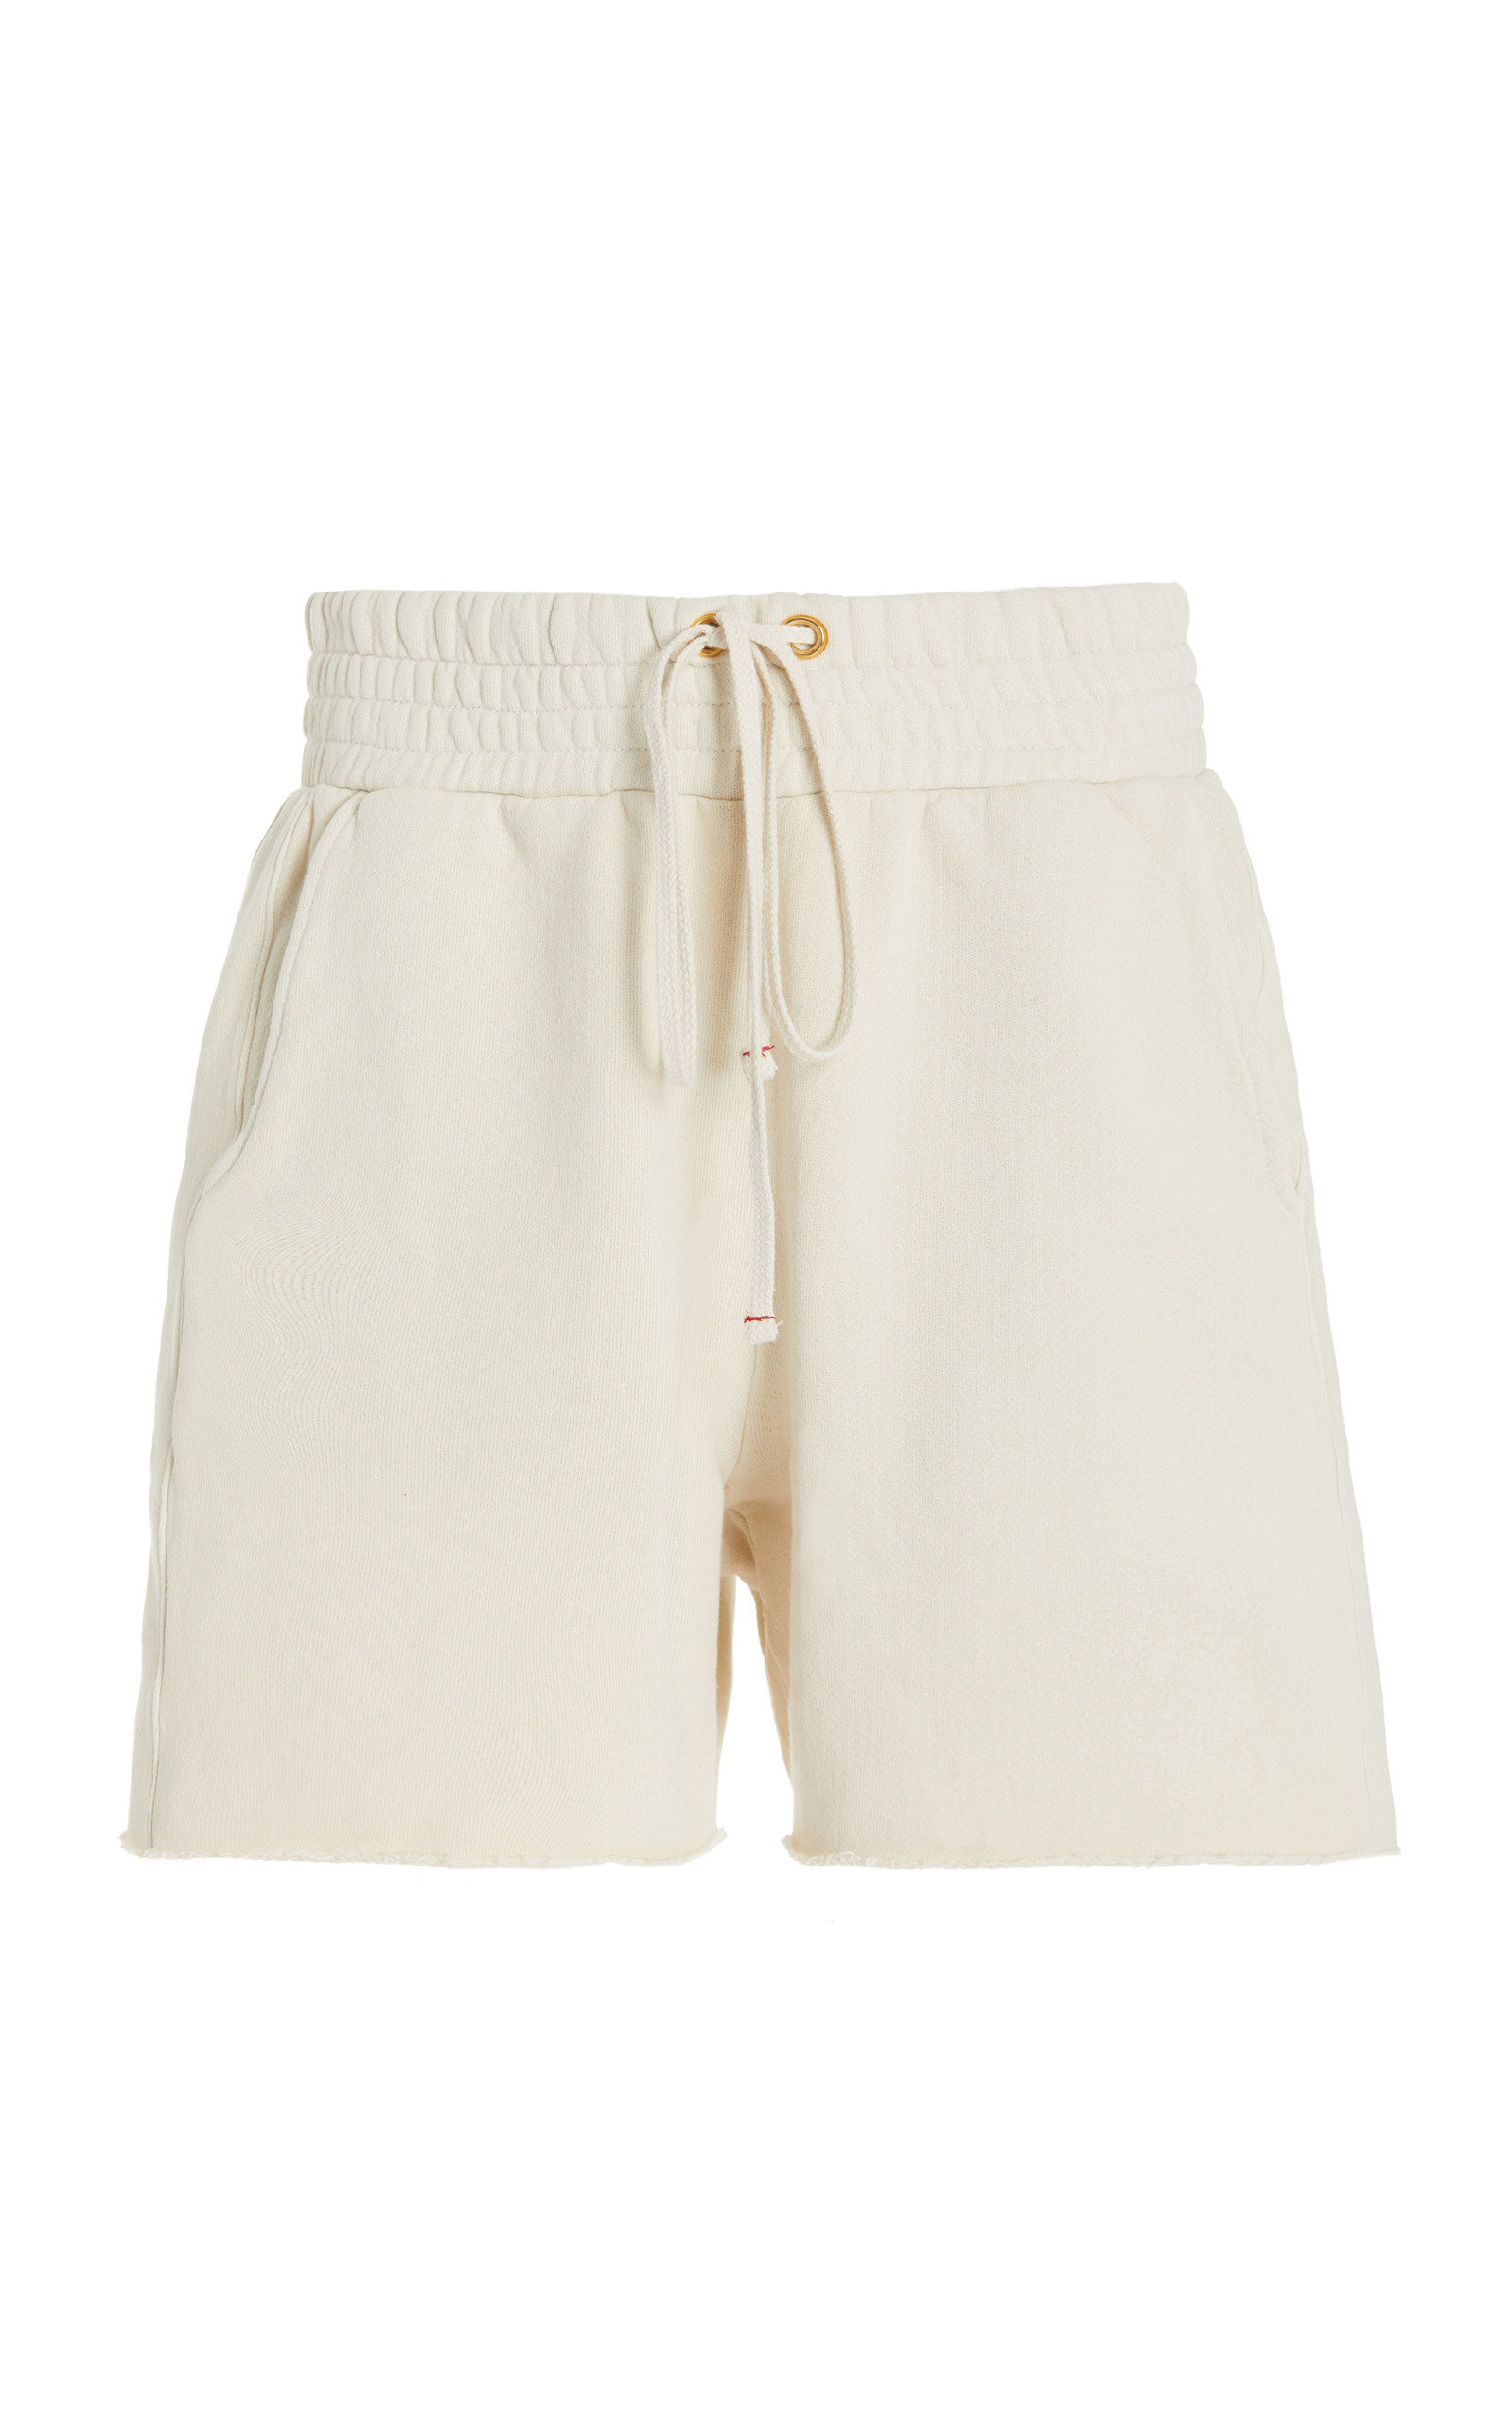 Les TienLes Tien - Women's Yacht Shorts - White - Moda Operandi | DailyMail